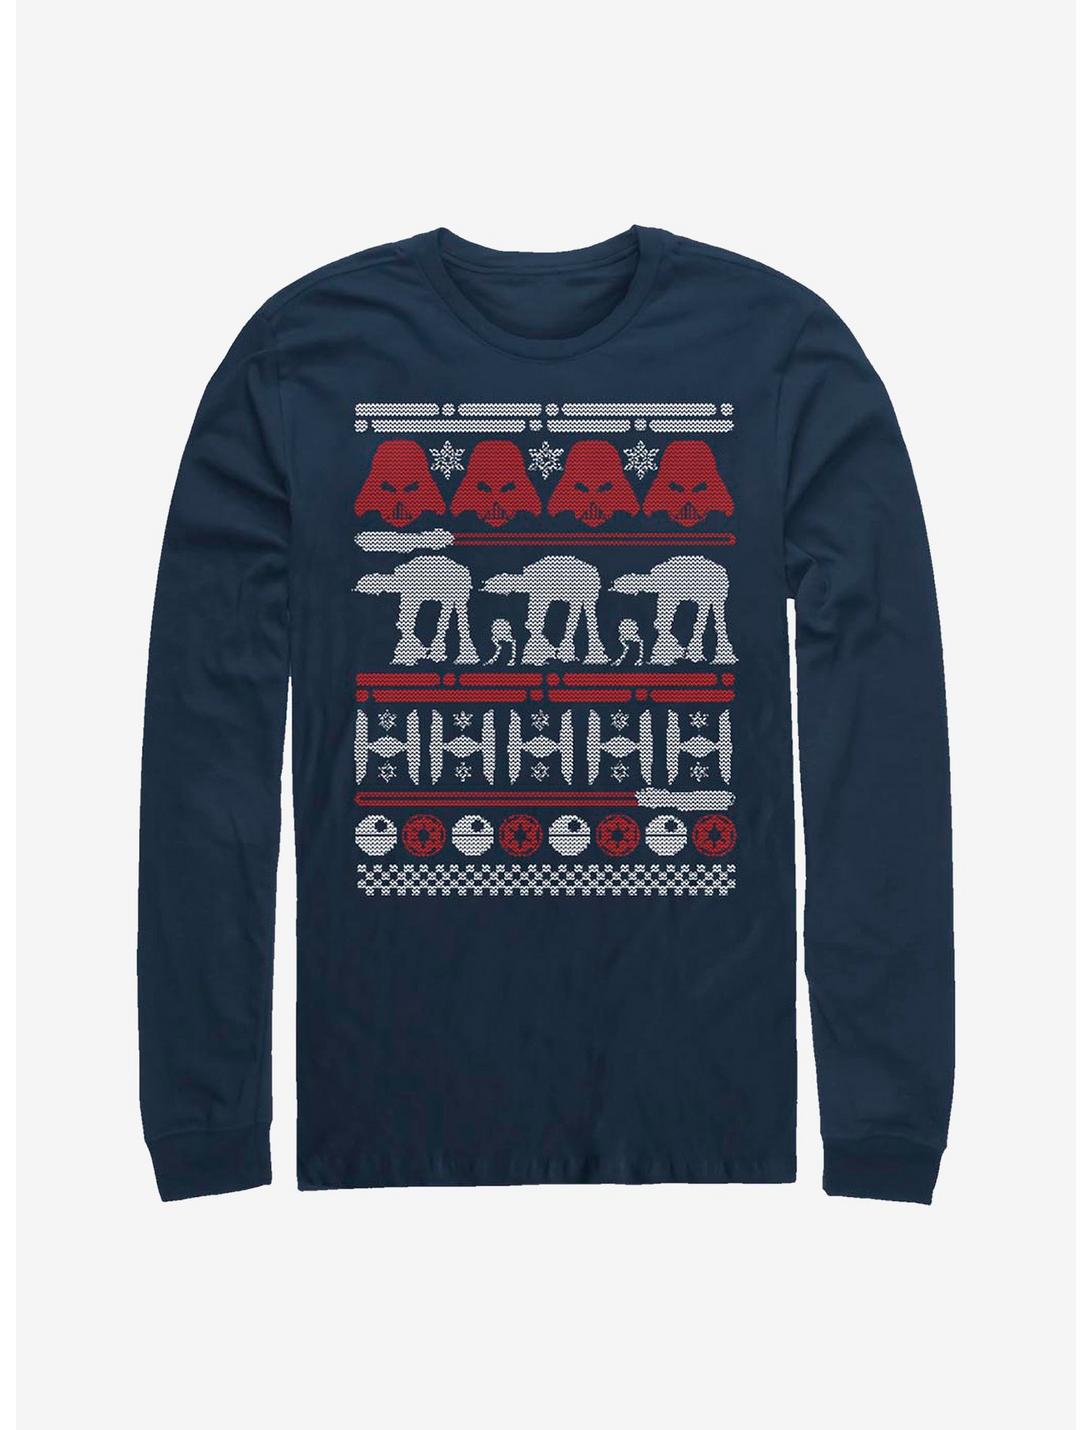 Star Wars Christmas Sweater Pattern Long-Sleeve T-Shirt, NAVY, hi-res